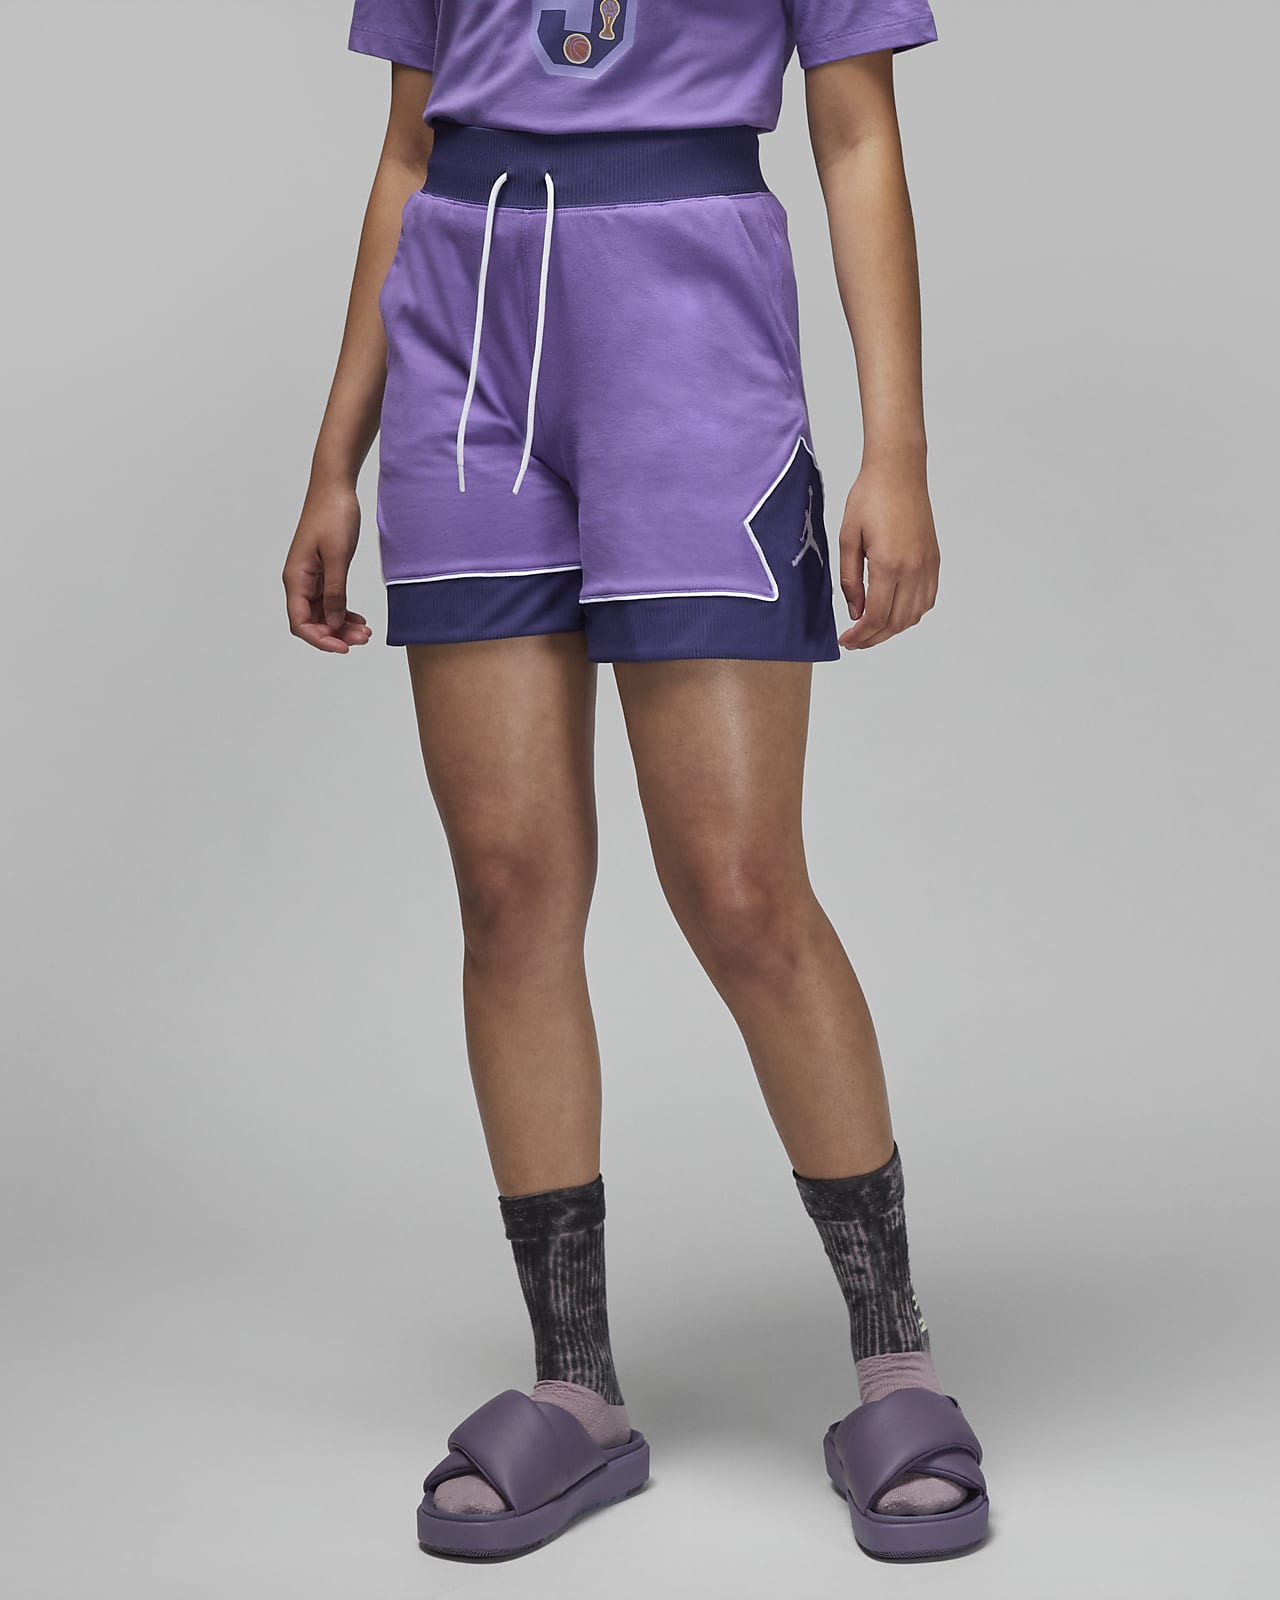 Women's Purple Shorts Shorts